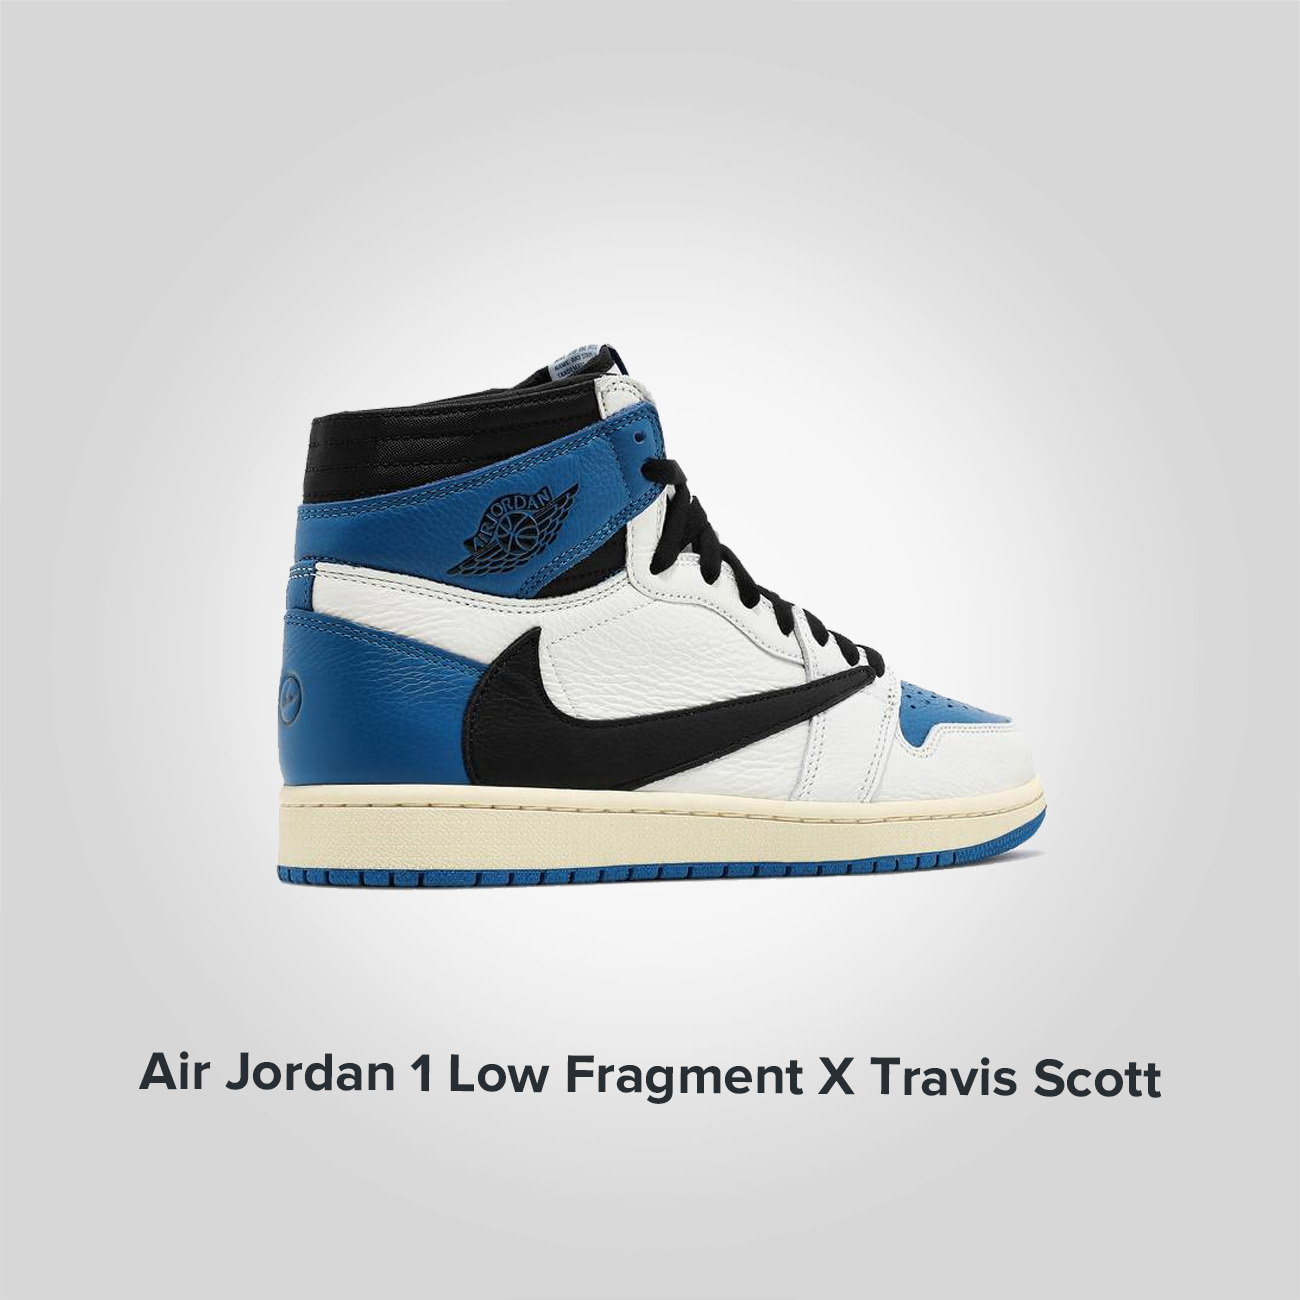 Jordan 1 High Fragment x Travis Scott